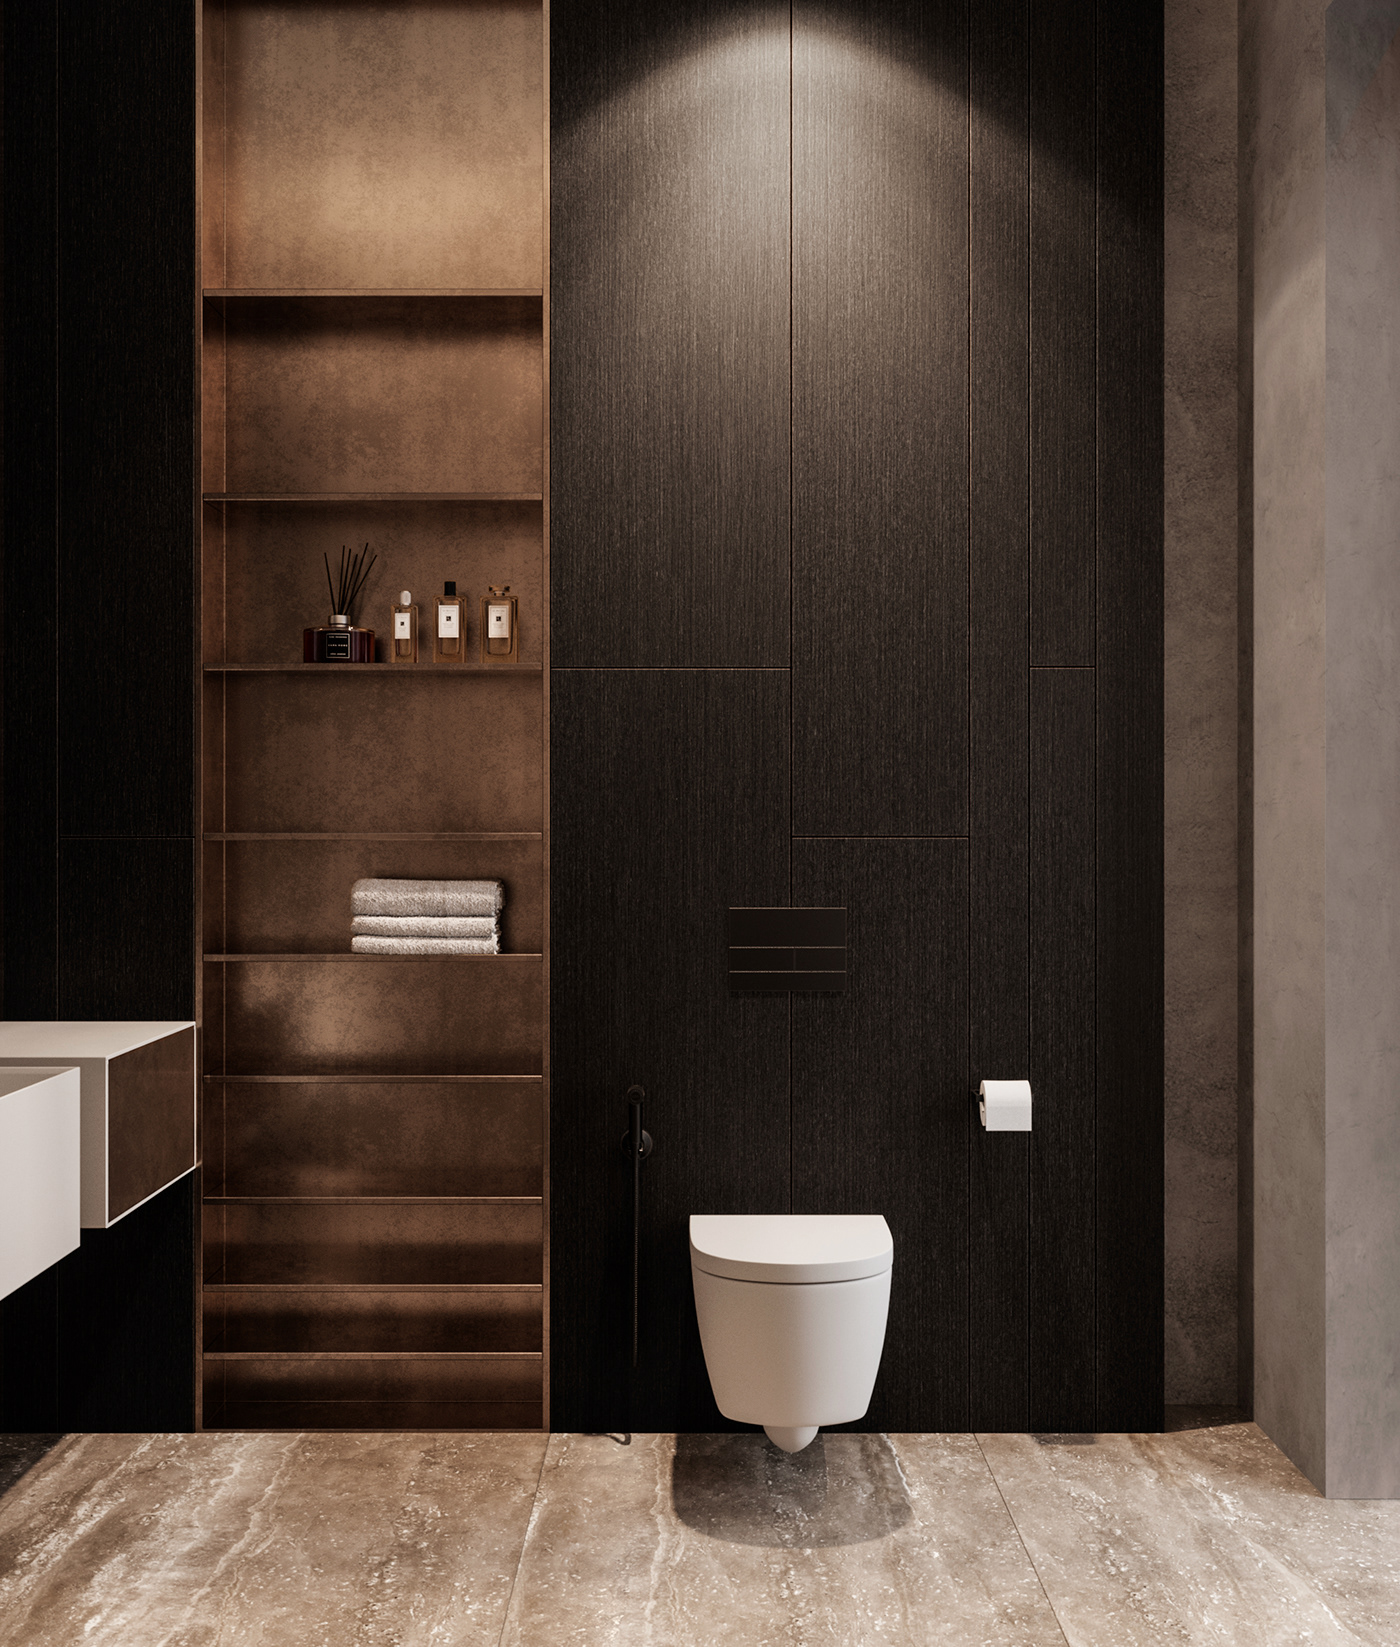 mofern modernhouse Privatehouse Spa spazone moderninterior interiordesign luxury